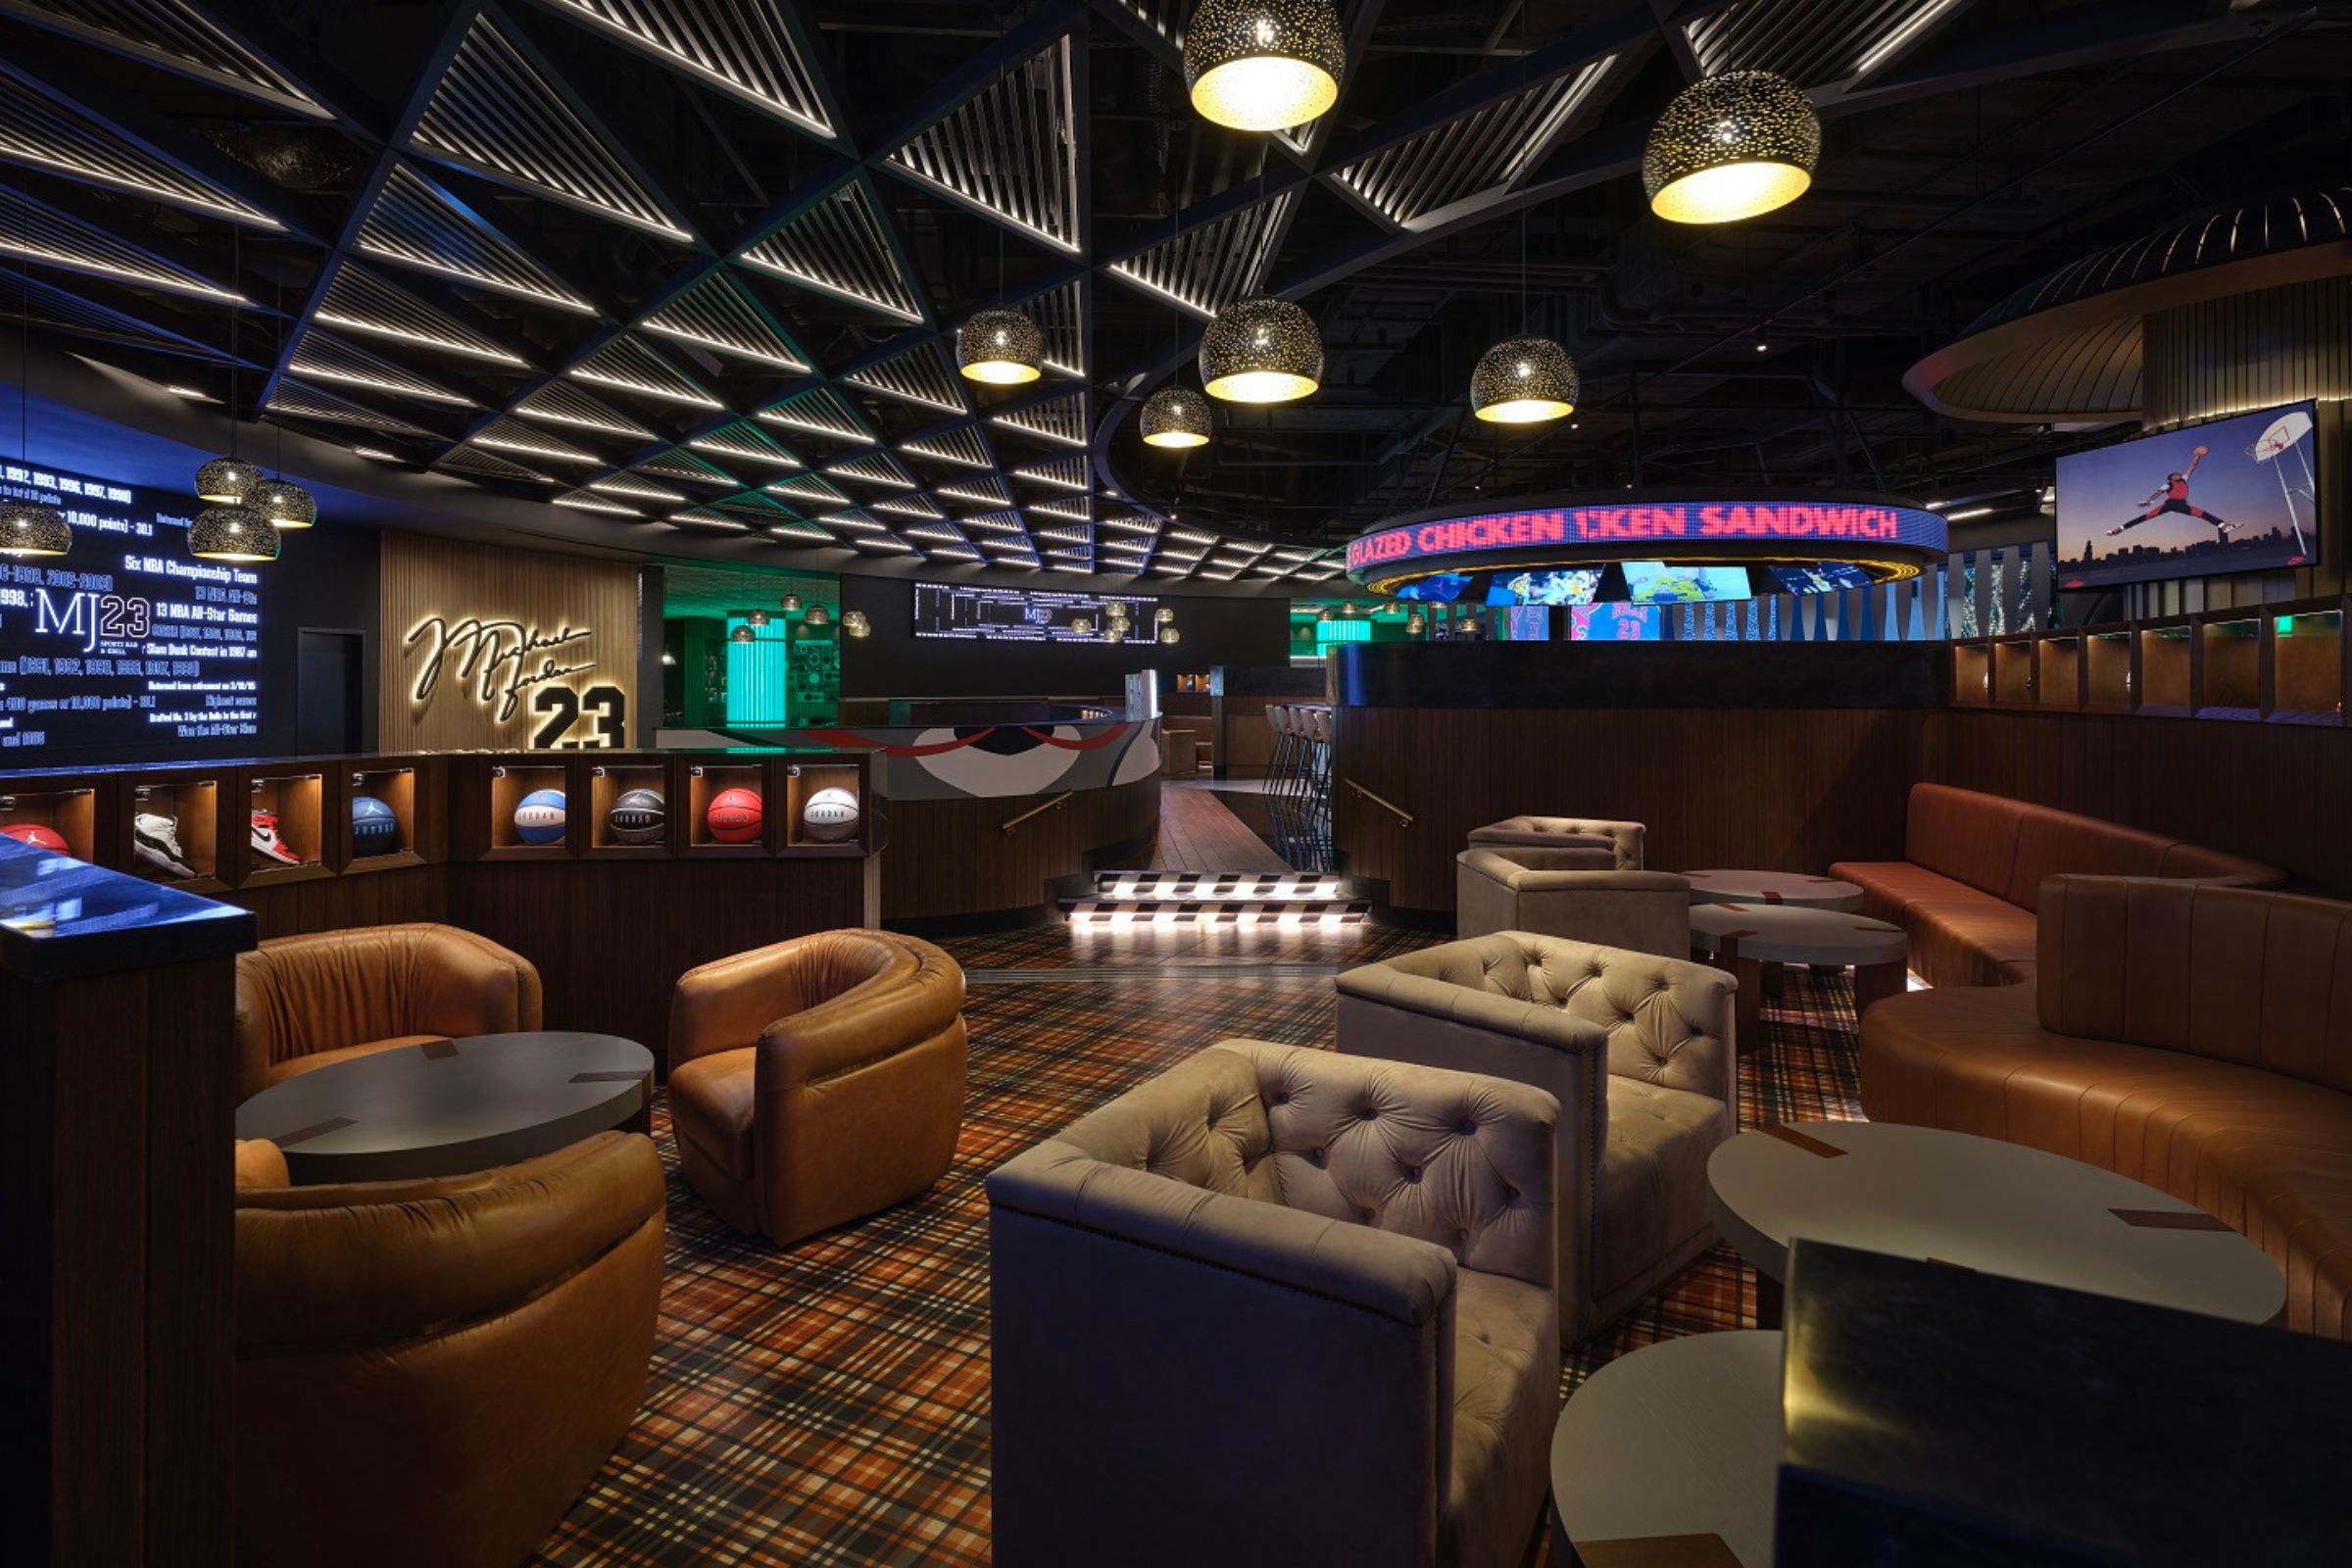 MJ23 Sports Bar& Grill, Inspire Resort, South Korea, Lounge Area - mobile version